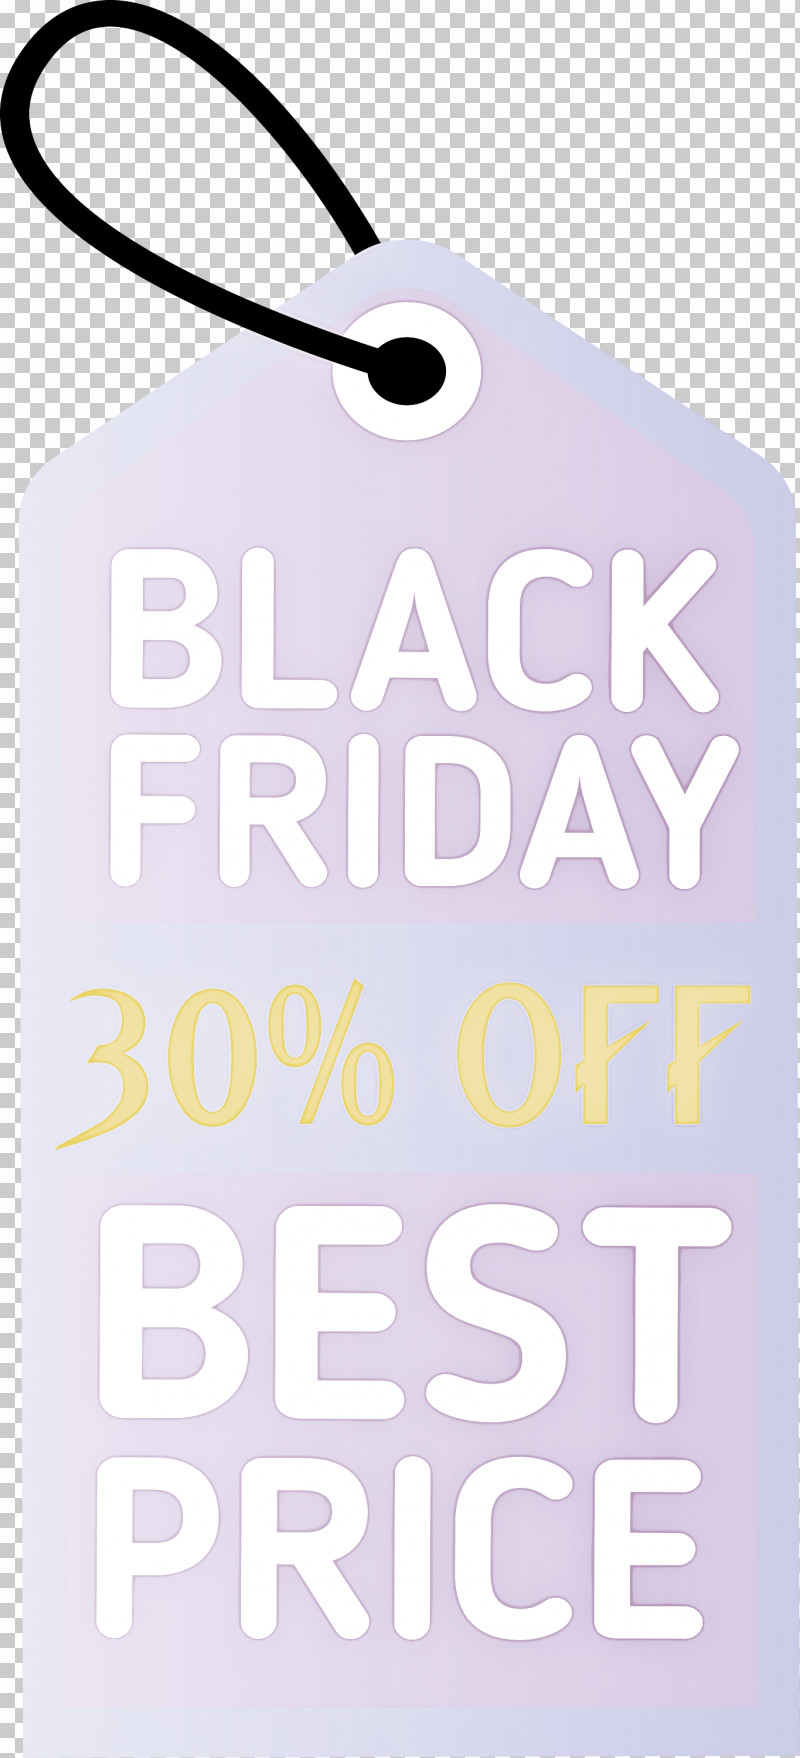 Black Friday Sale Black Friday Discount Black Friday PNG, Clipart, Black Friday, Black Friday Discount, Black Friday Sale, Logo, M Free PNG Download